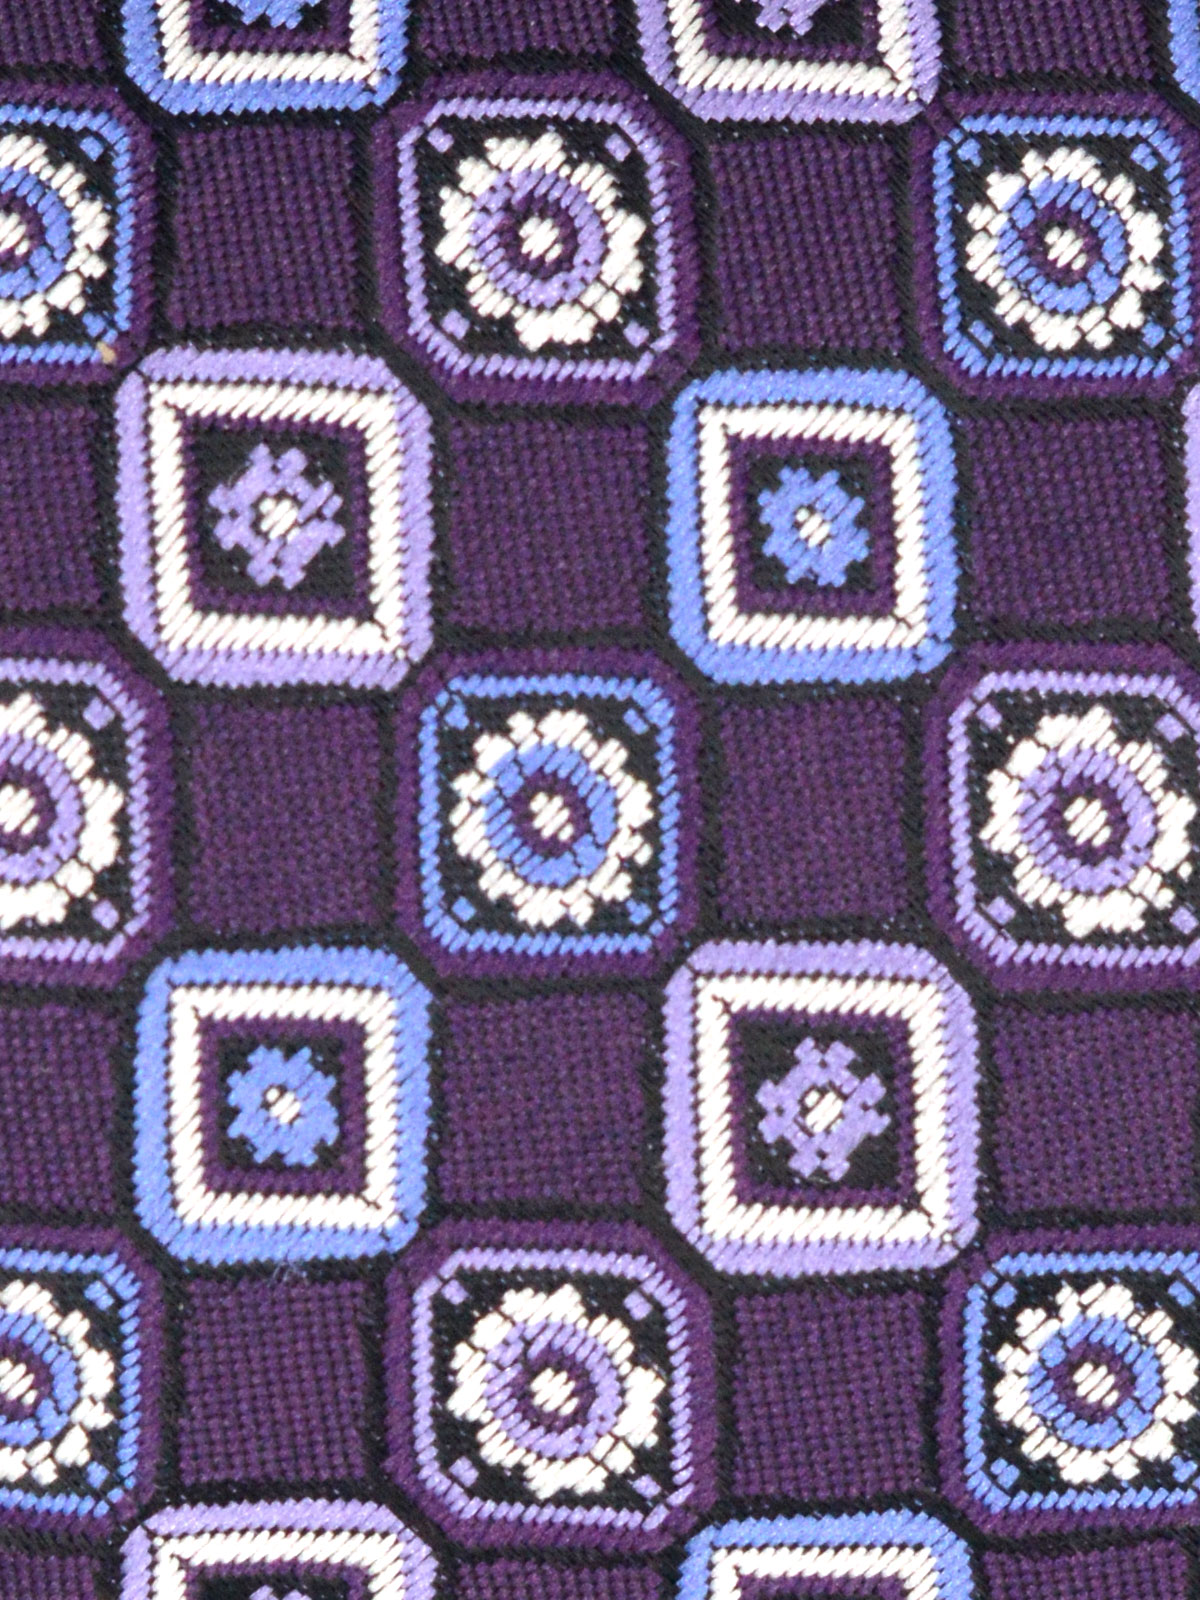  tie in dark purple flowers and square  - 10156 - € 14.06 img2